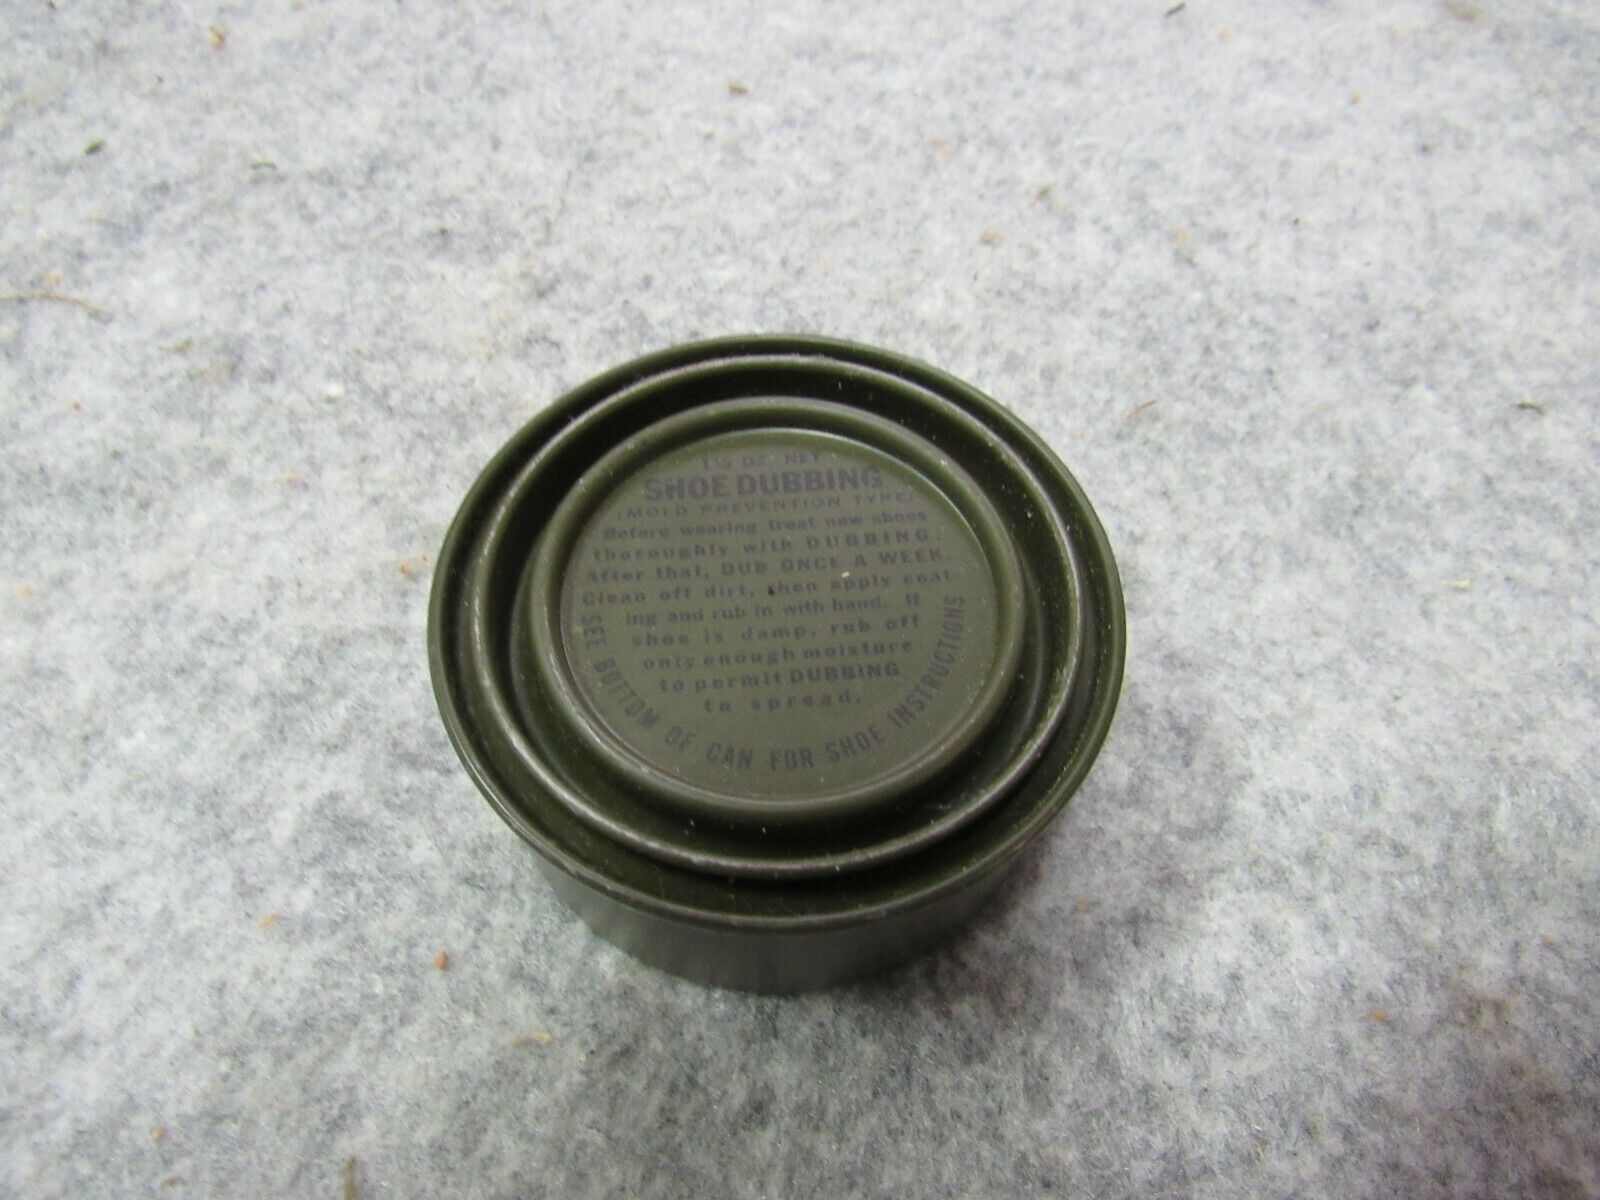 US WWII Boot Dubbing NOS in original 1 1/2 ounce tin 100% original 